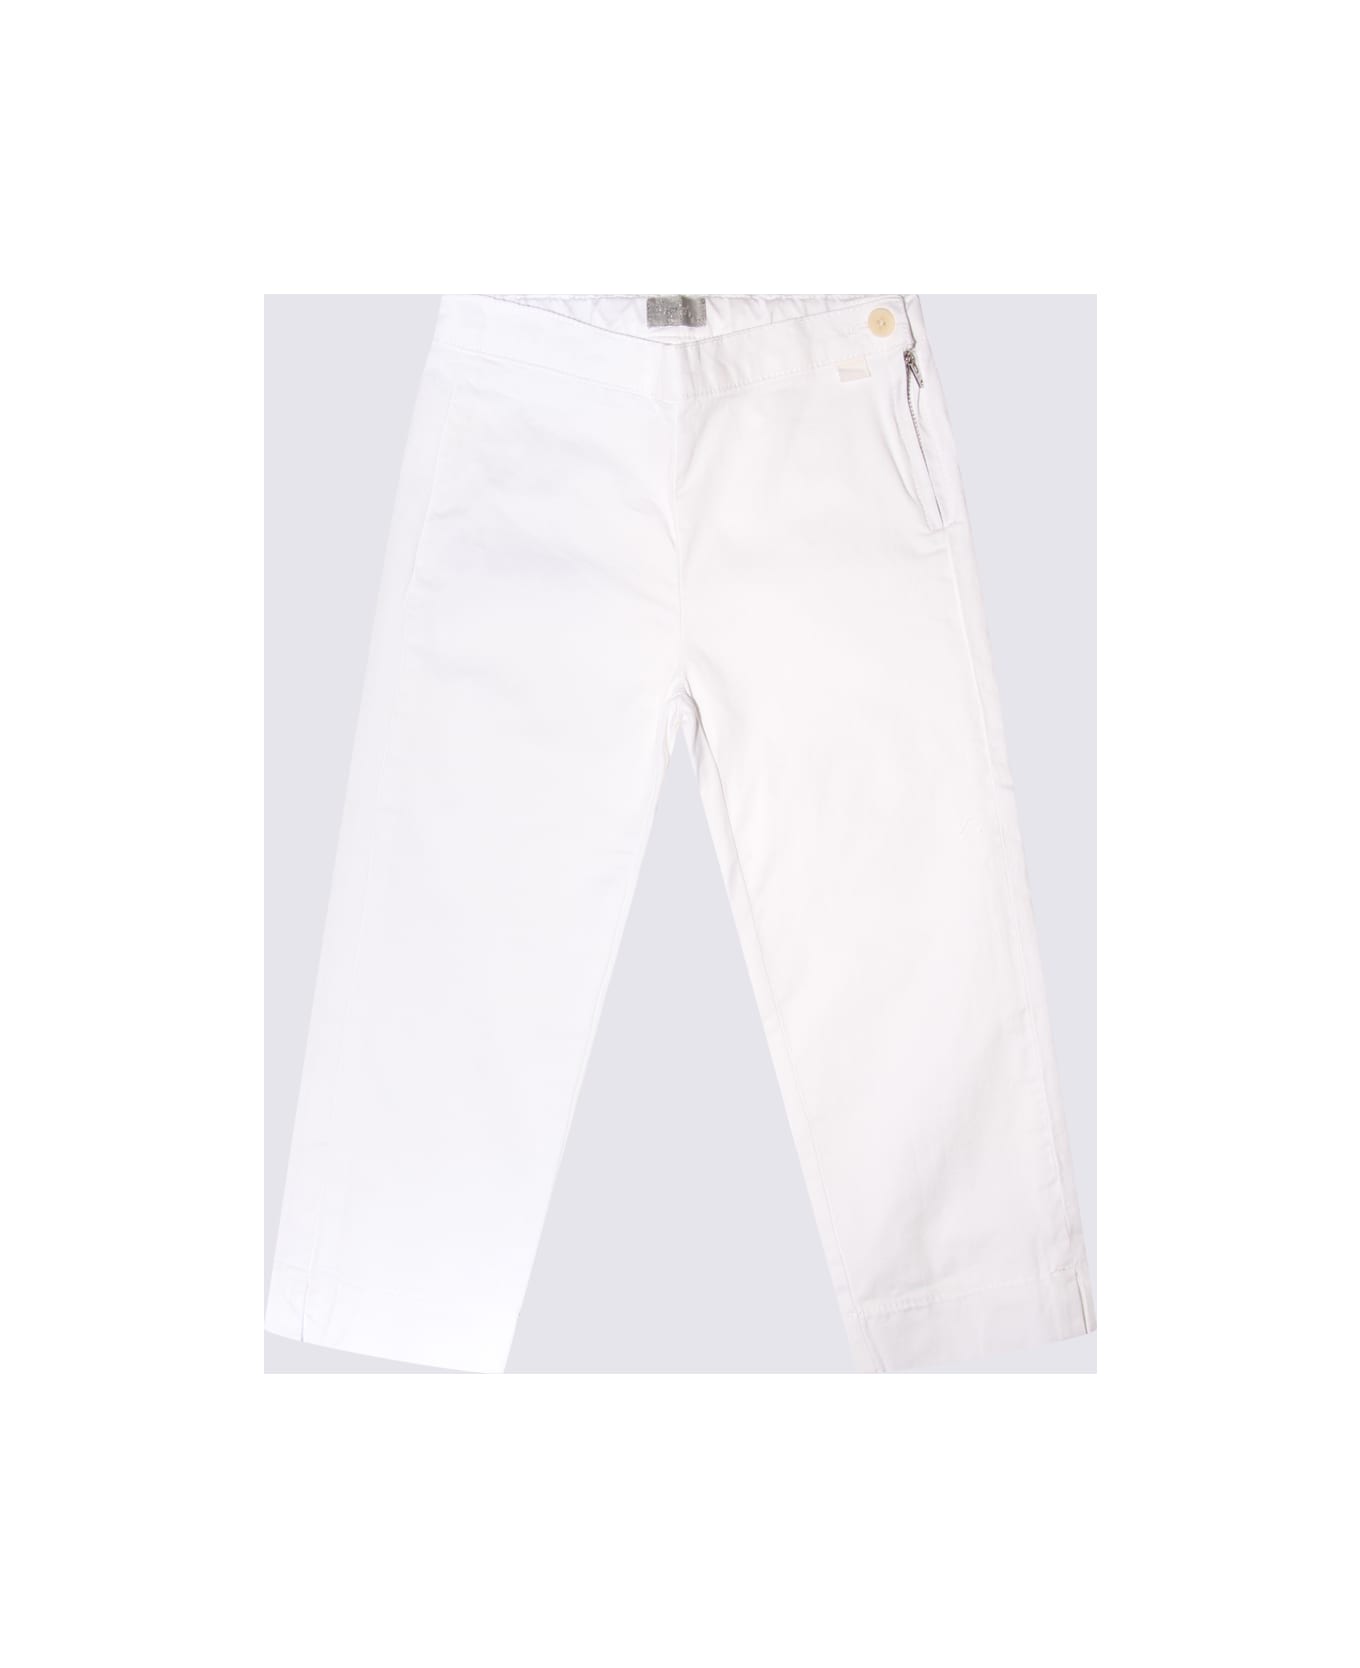 Il Gufo White Cotton Pants - White